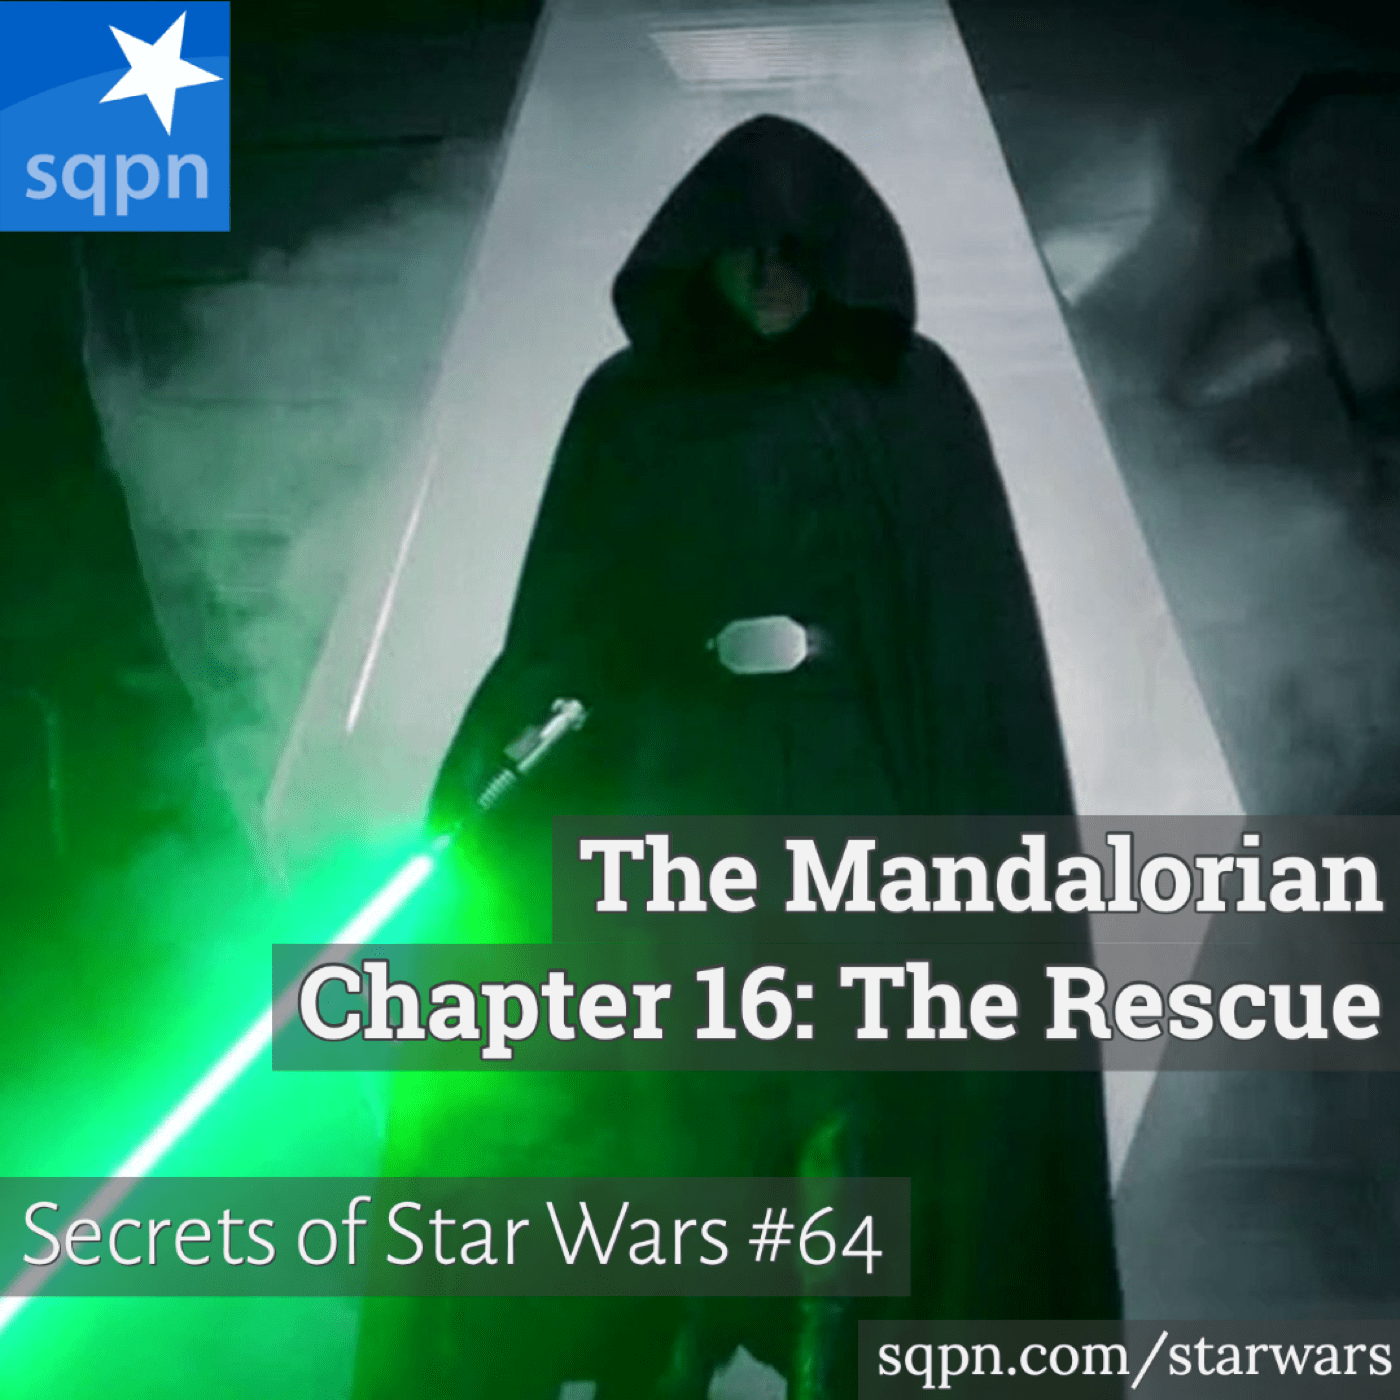 The Mandalorian, Ch. 16: The Rescue